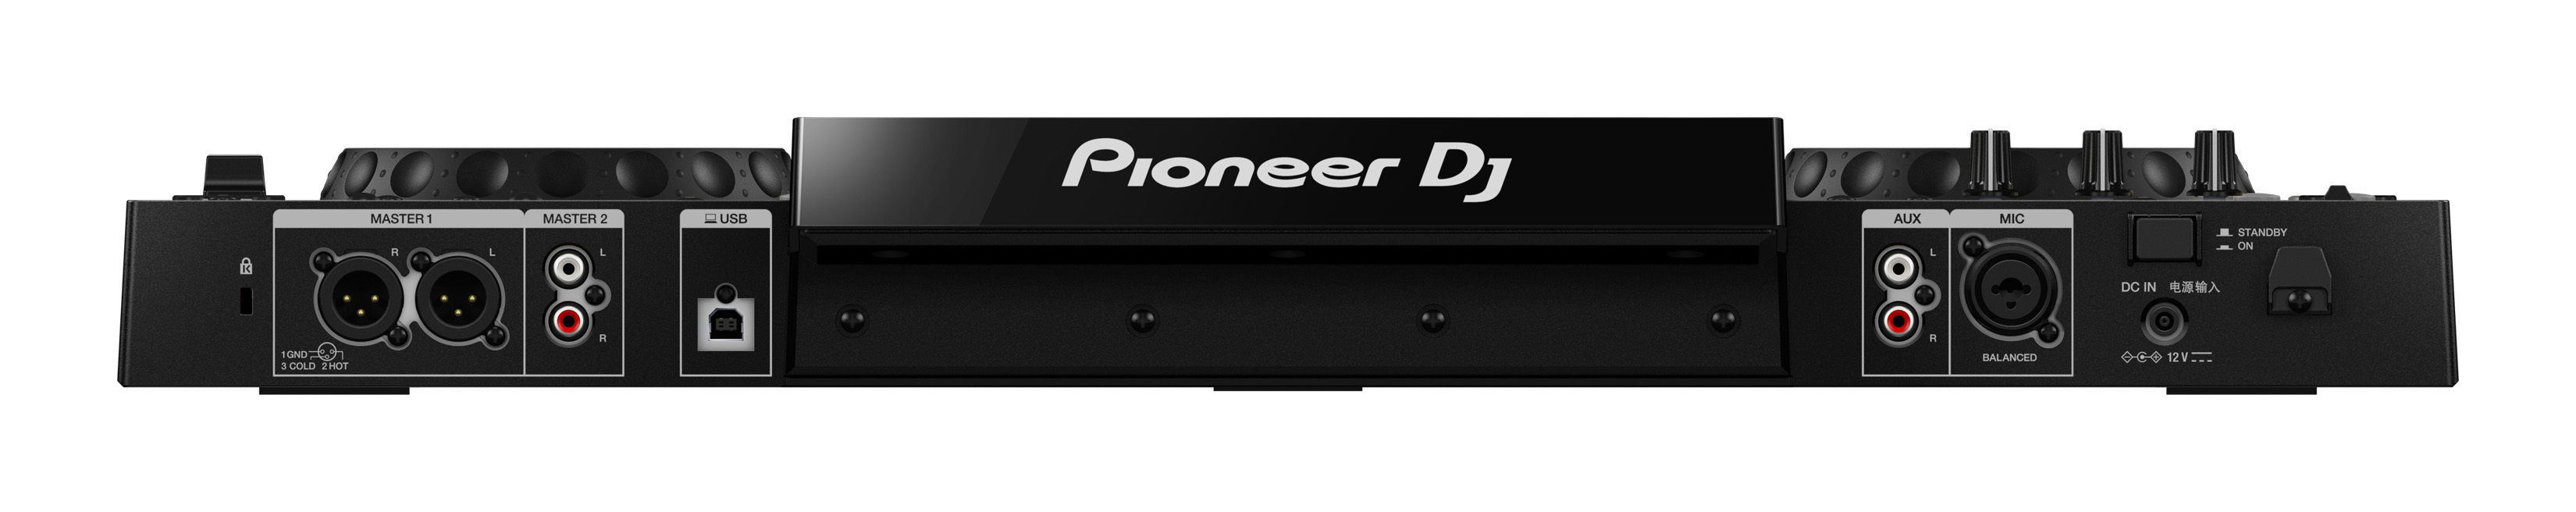 PIONEER DJ Schwarz All-in-one-Gerät, XDJ-RR/SYJX